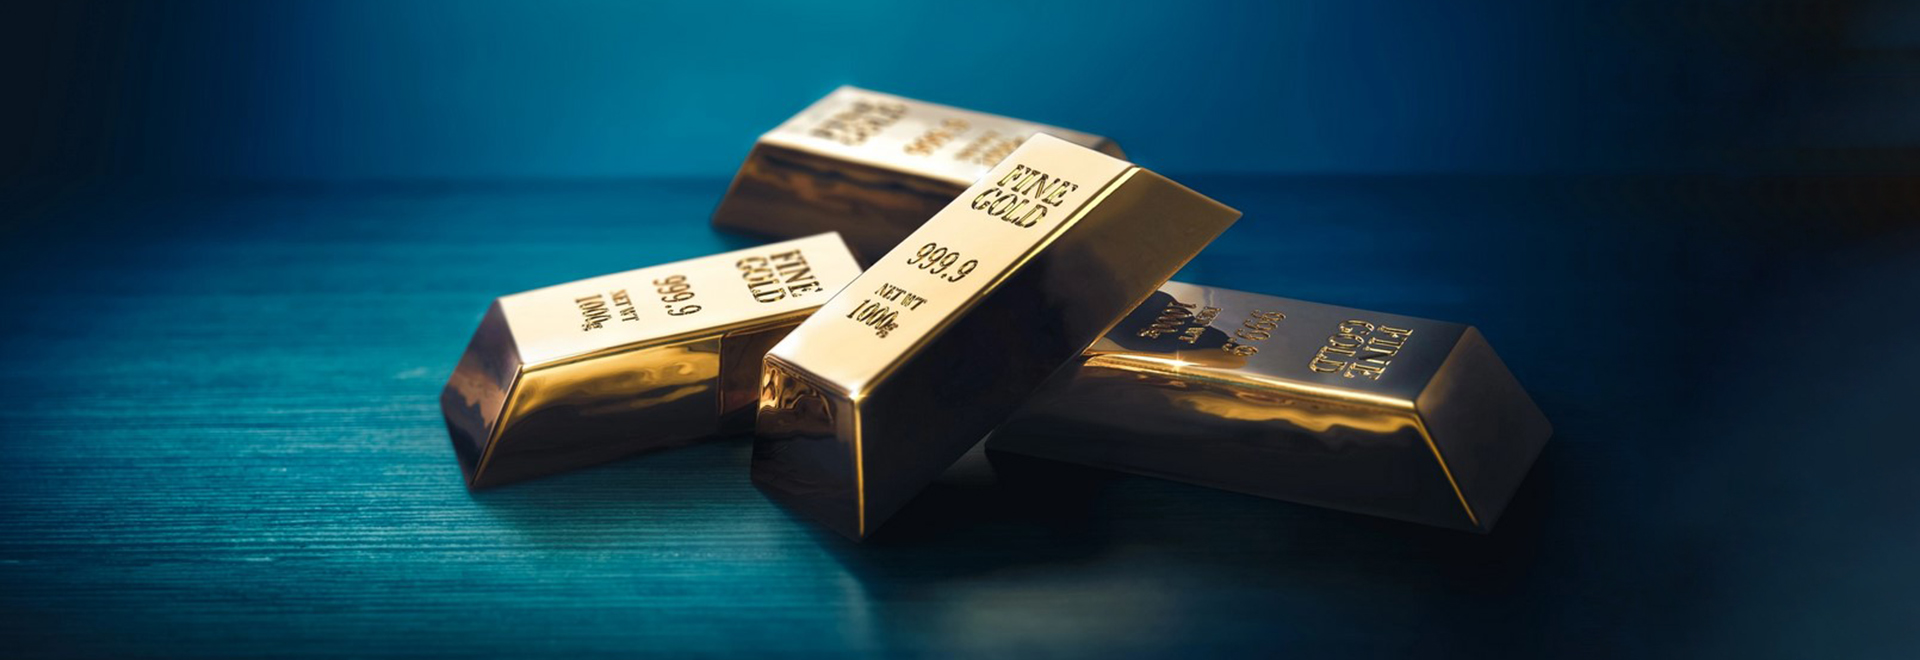 Gold Is Seeing Renewed Interest